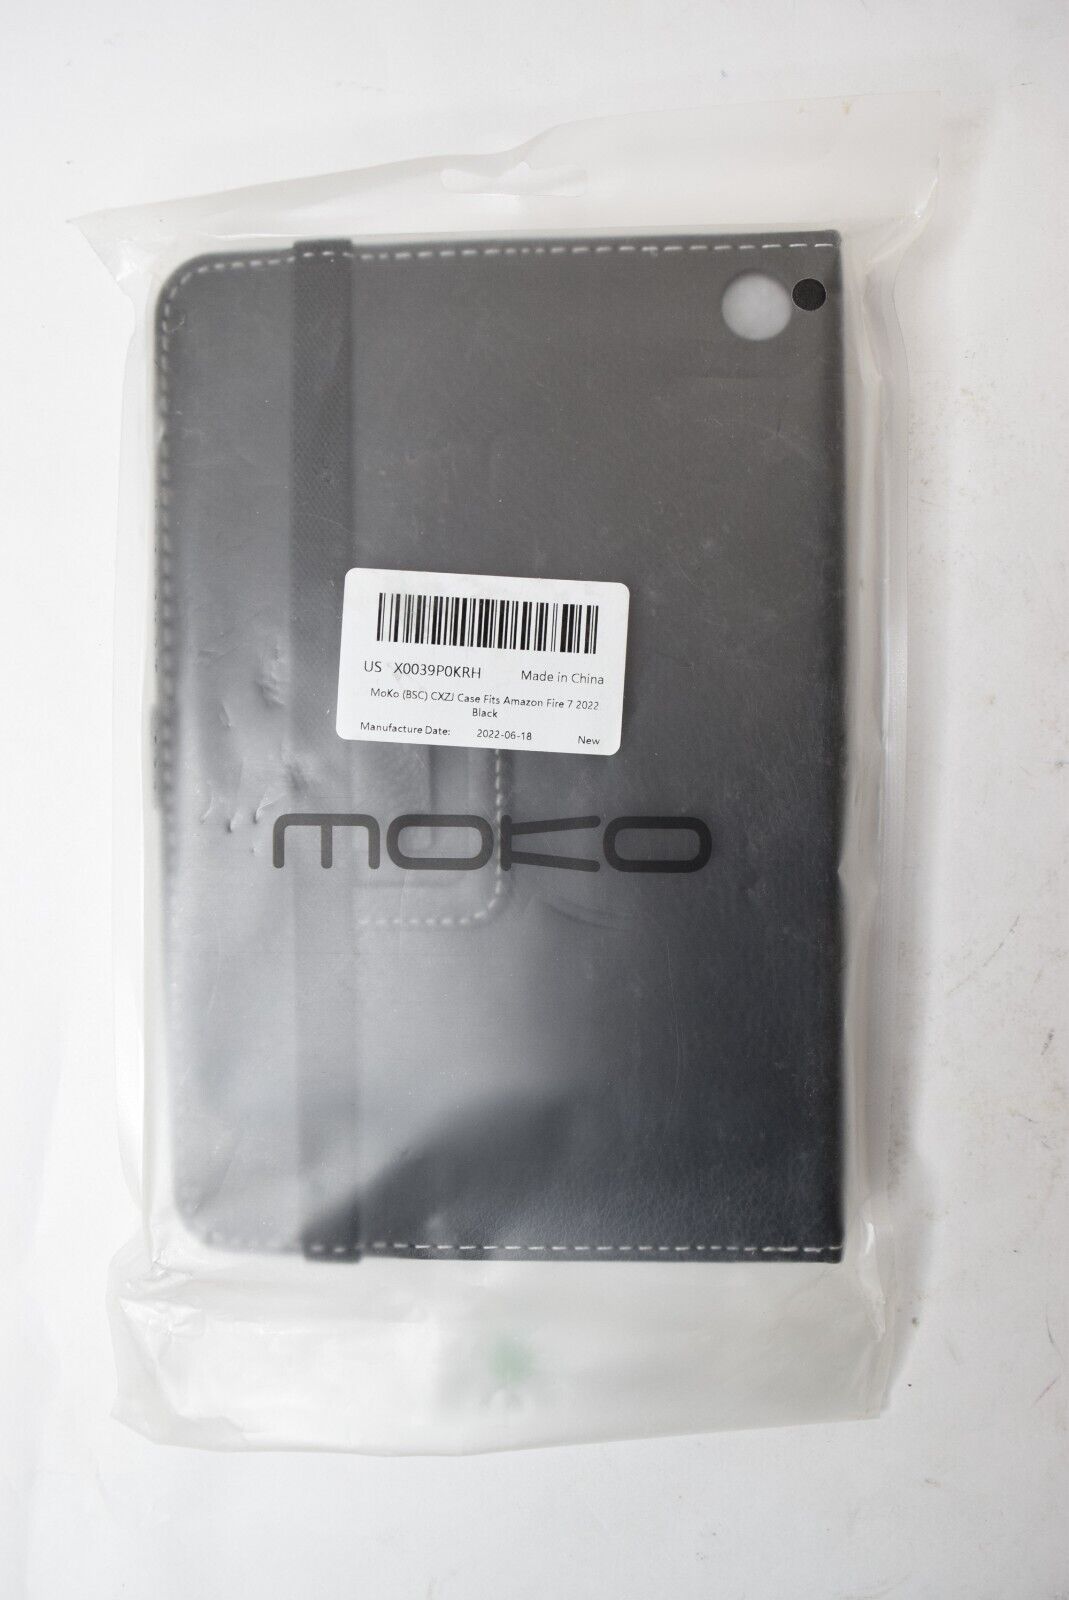 Moko BSC CXZJ Slim Black Folding Stand Case for Amazon Fire 7 w/ Grip